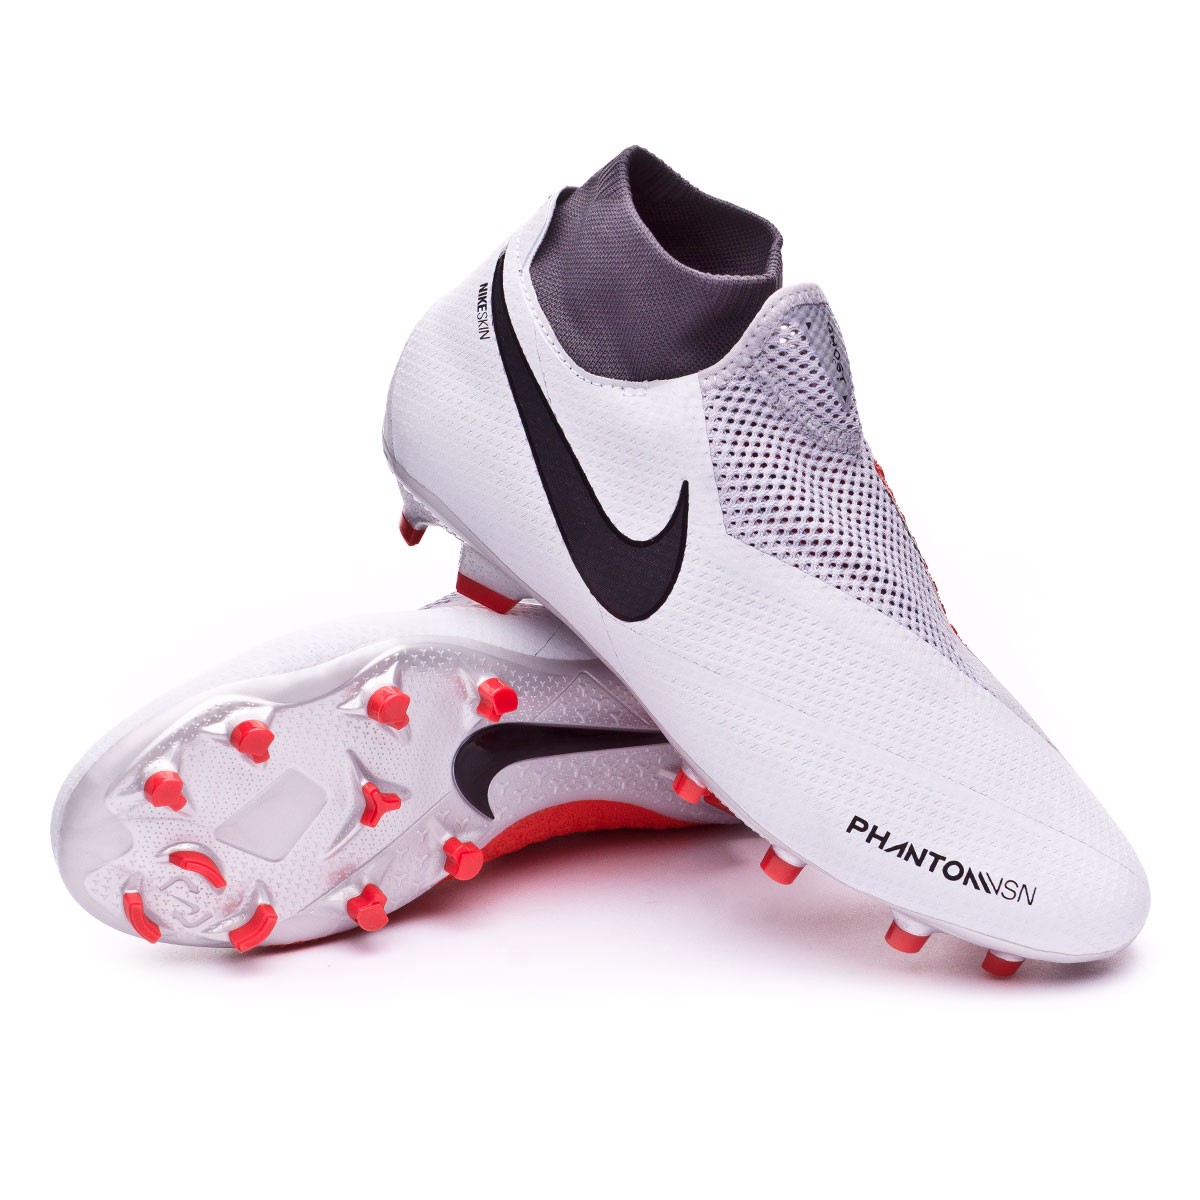 Nike Football Unveils PhantomVSN Football Boots